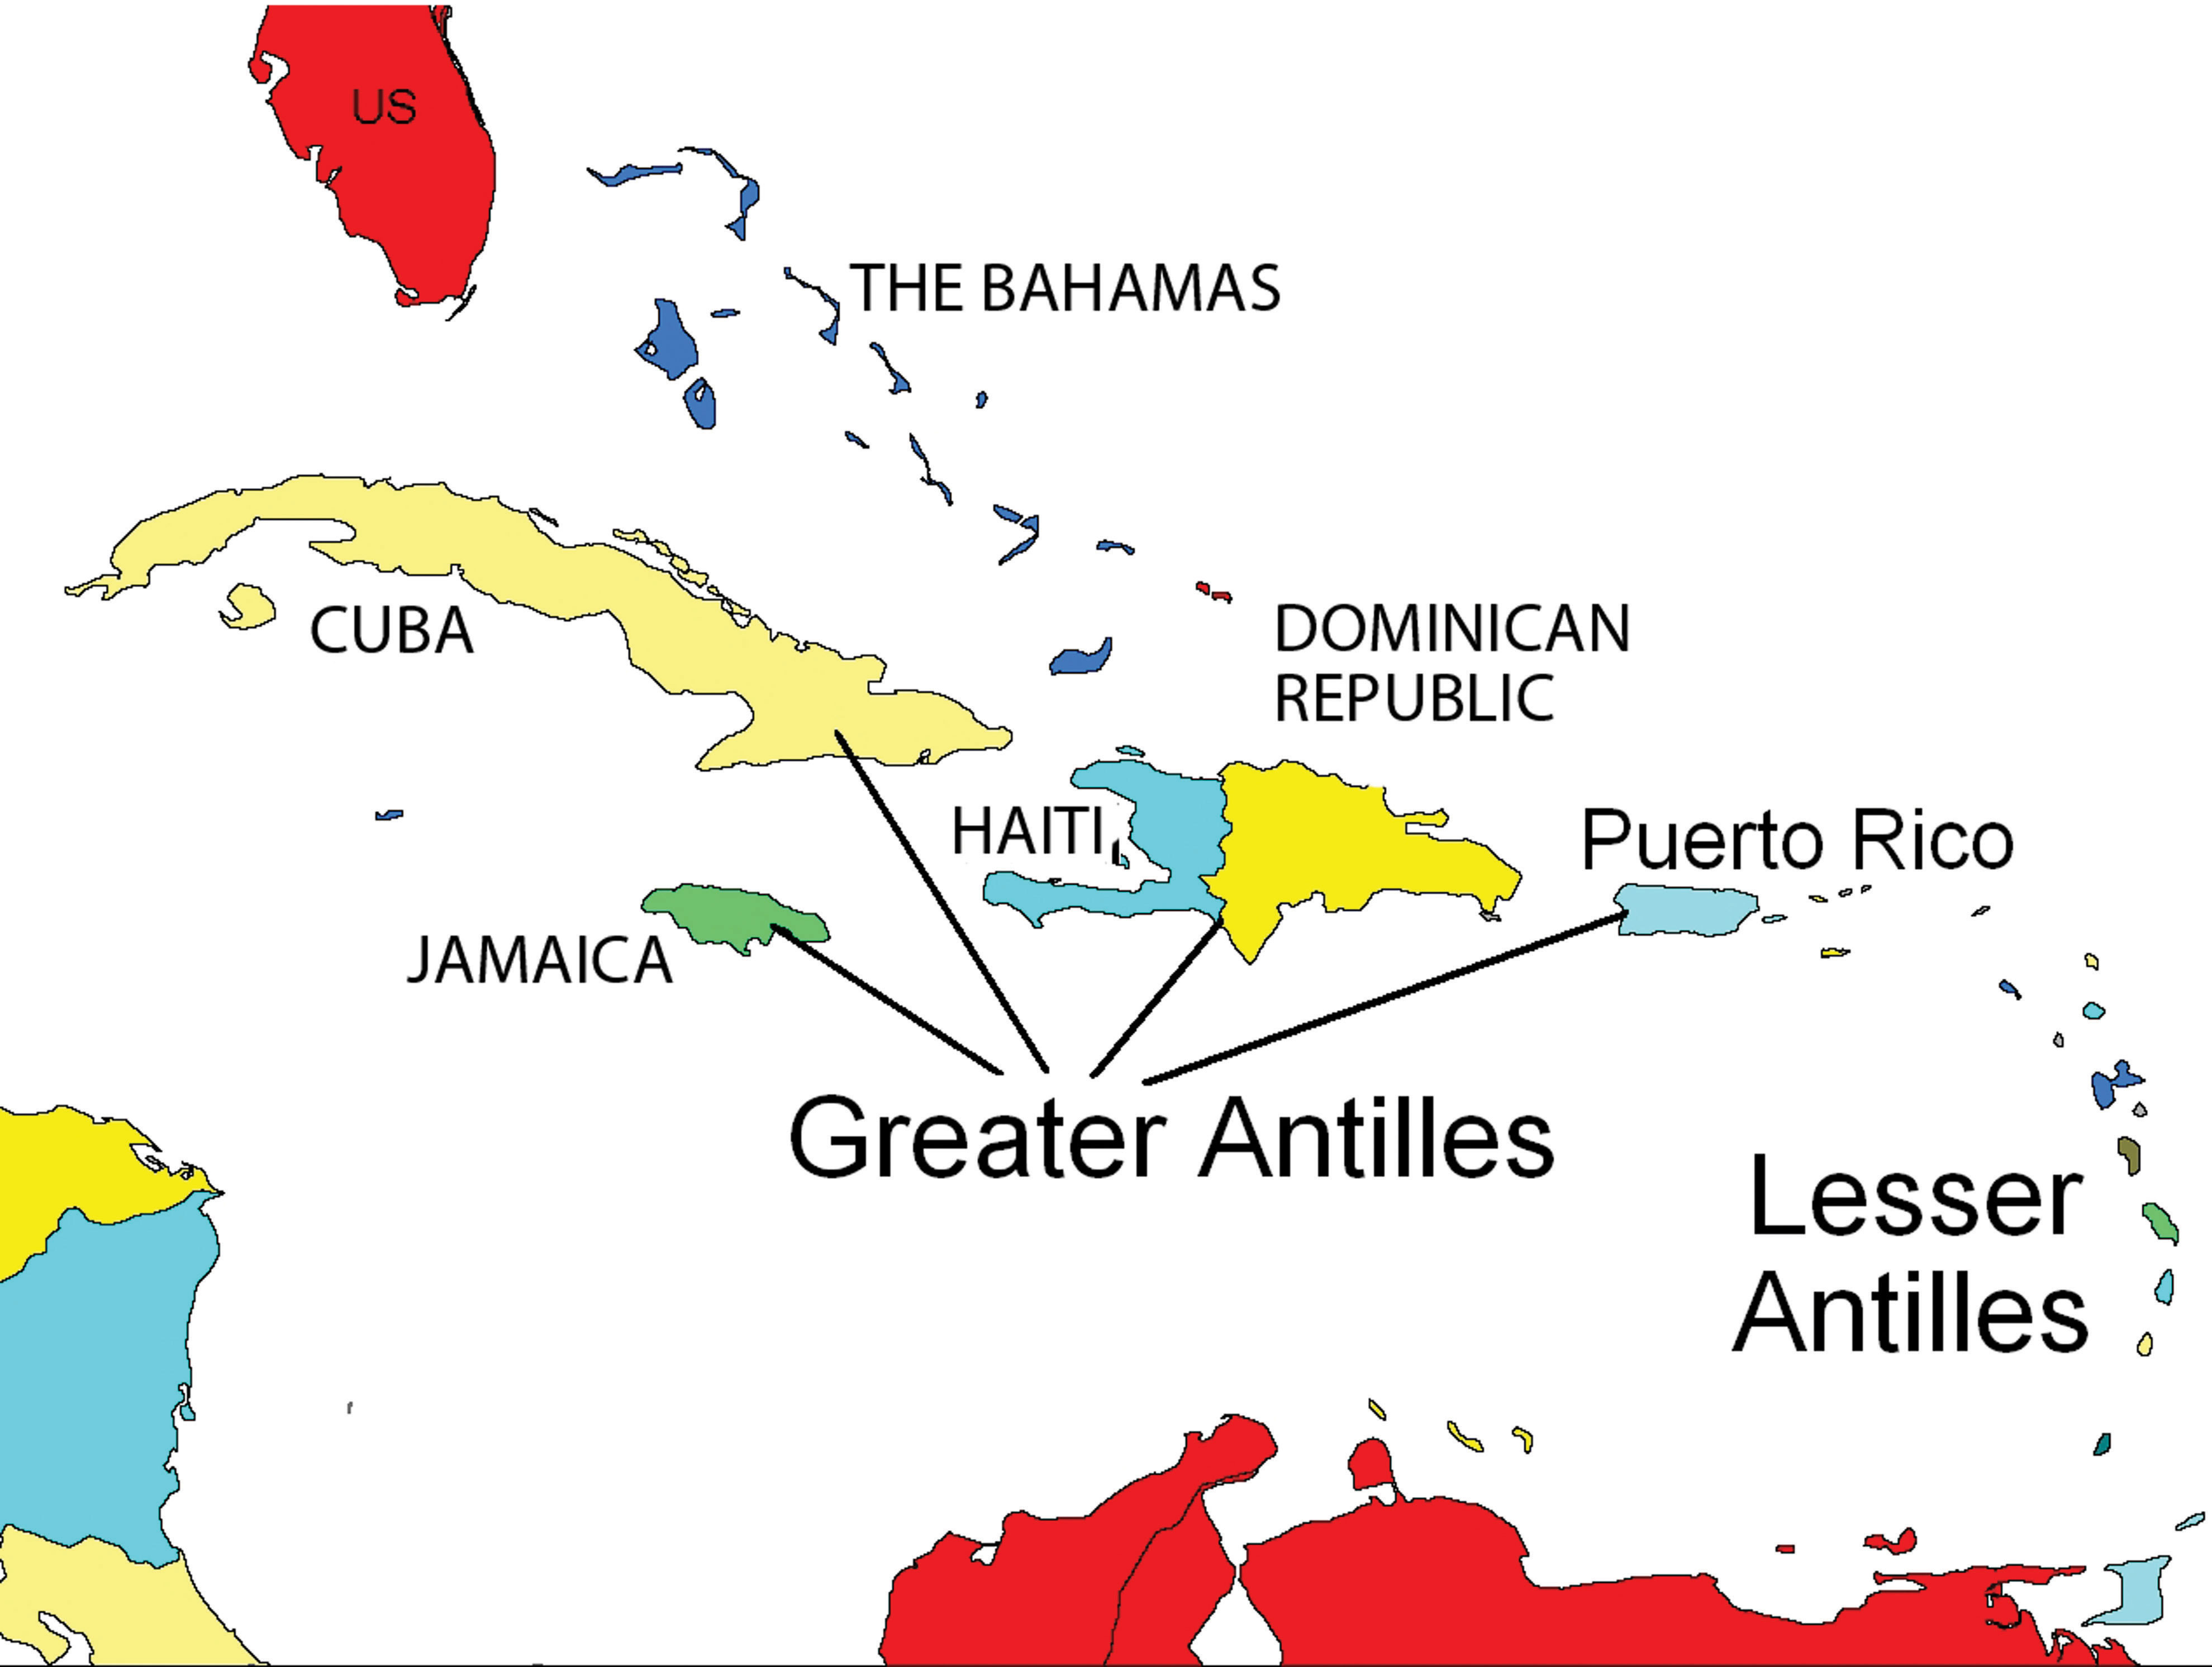 British colonization of the Americas